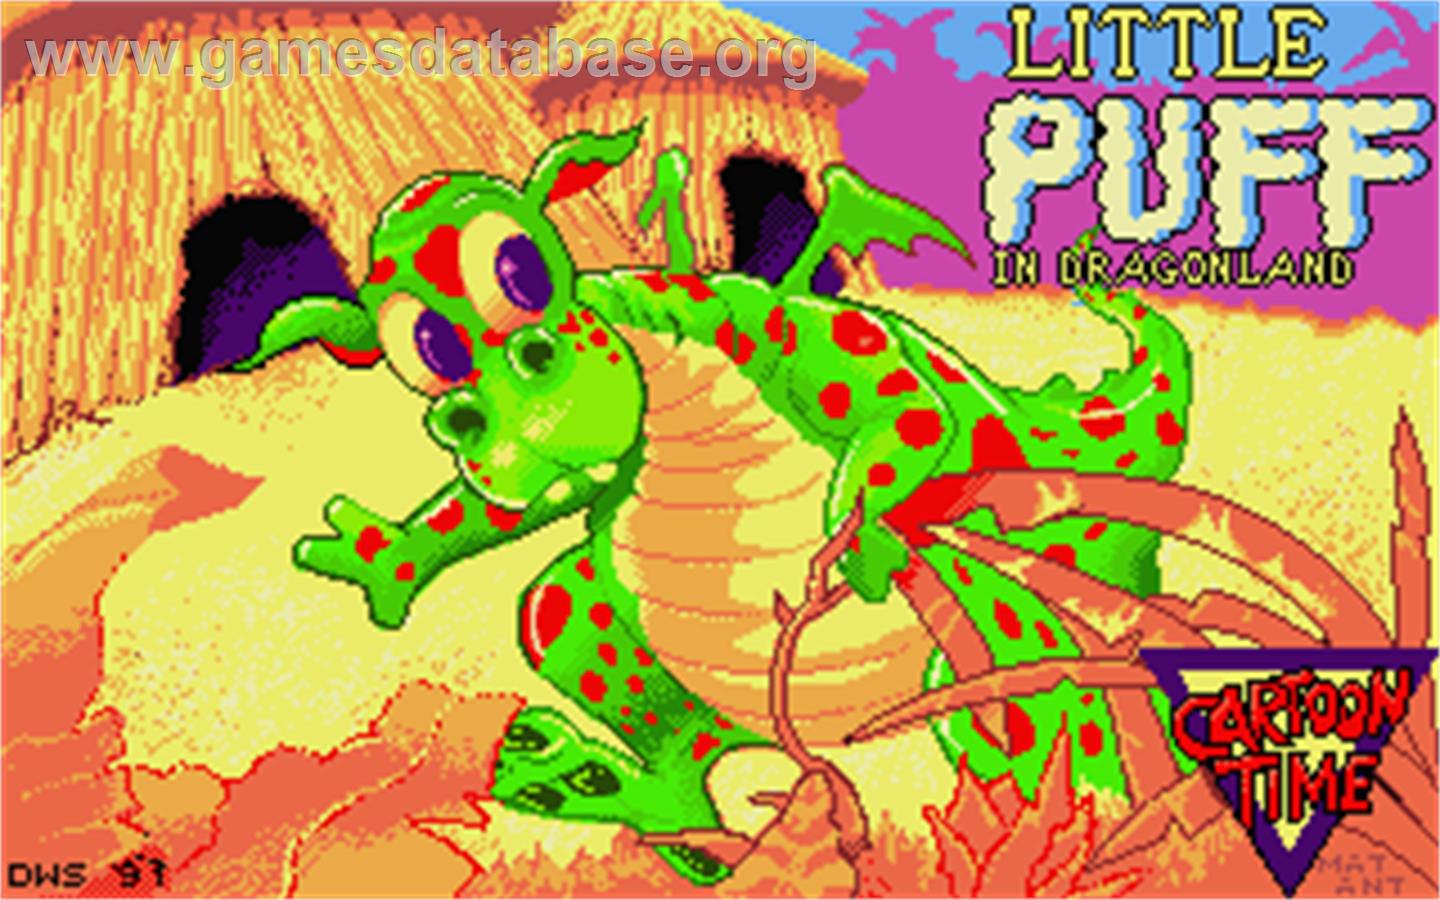 Little Puff in Dragonland - Atari ST - Artwork - Title Screen